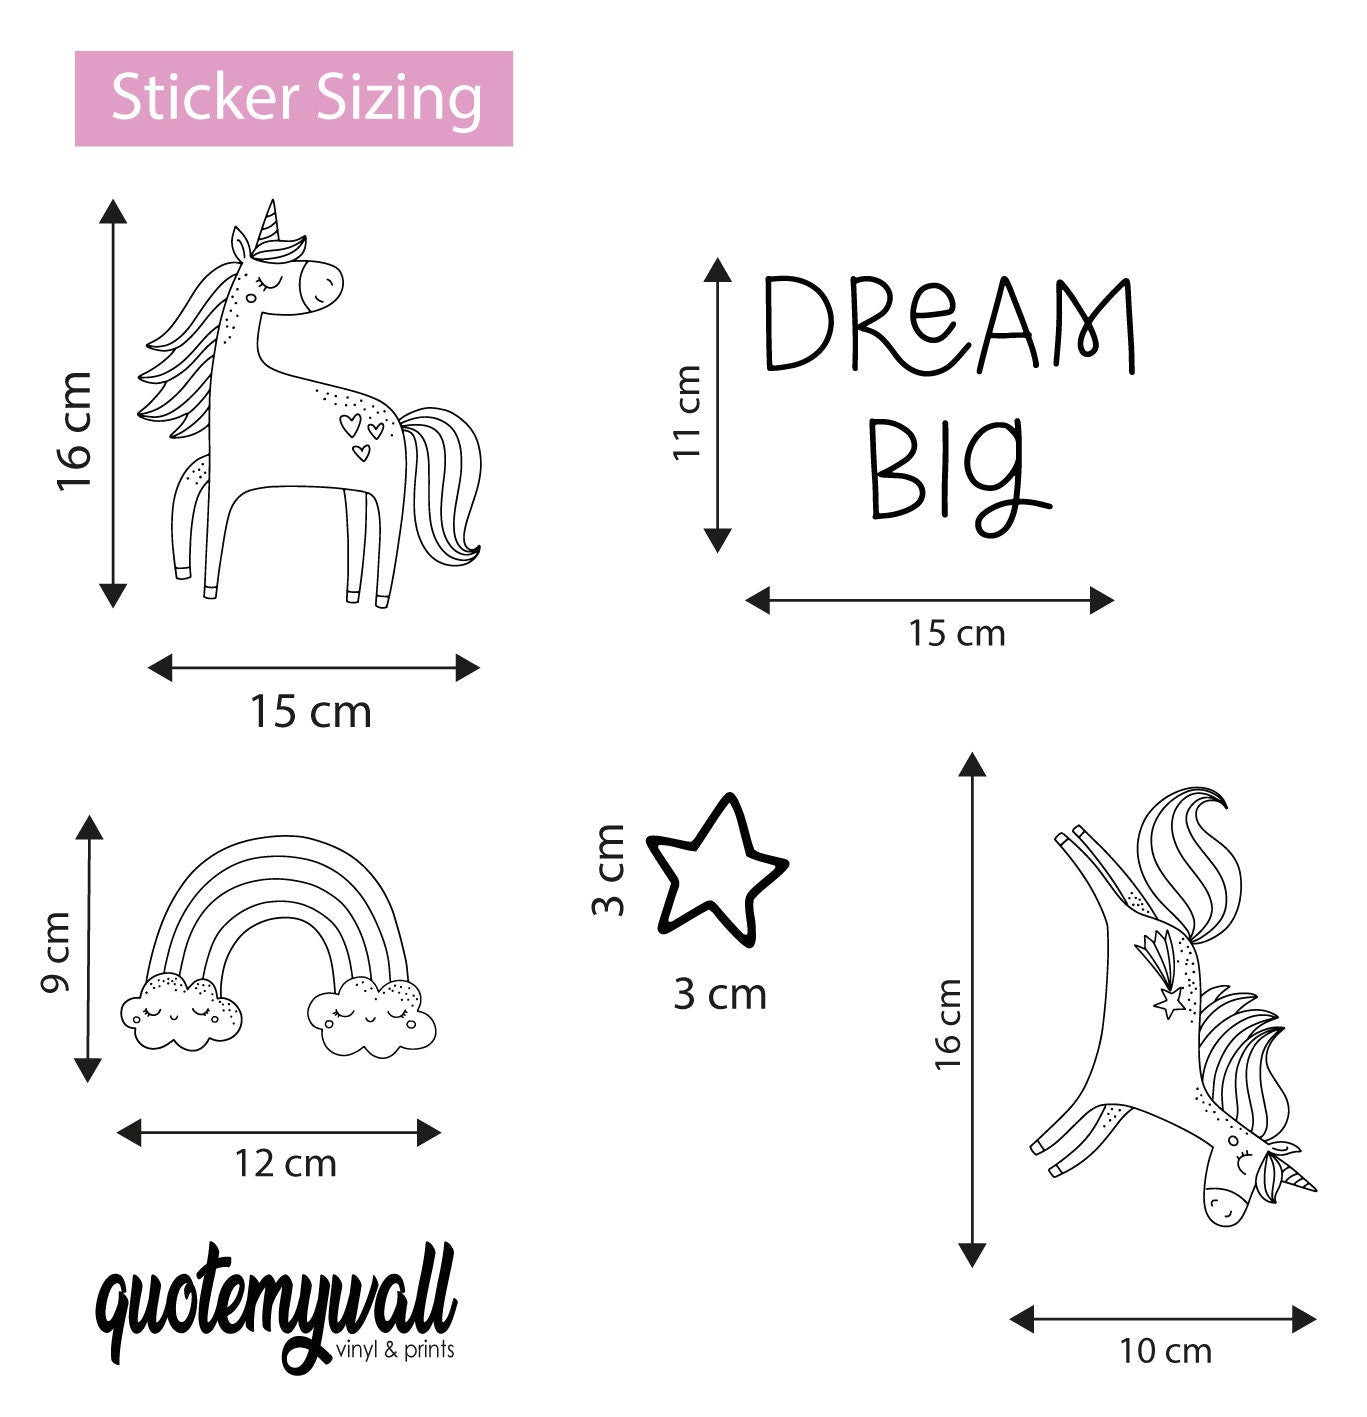 Dream Big Unicorn Nursery Wall Stickers, Unicorn Wall Decals, Magical Wall Art, Girls Wall Stickers, Wall Decals For Girls